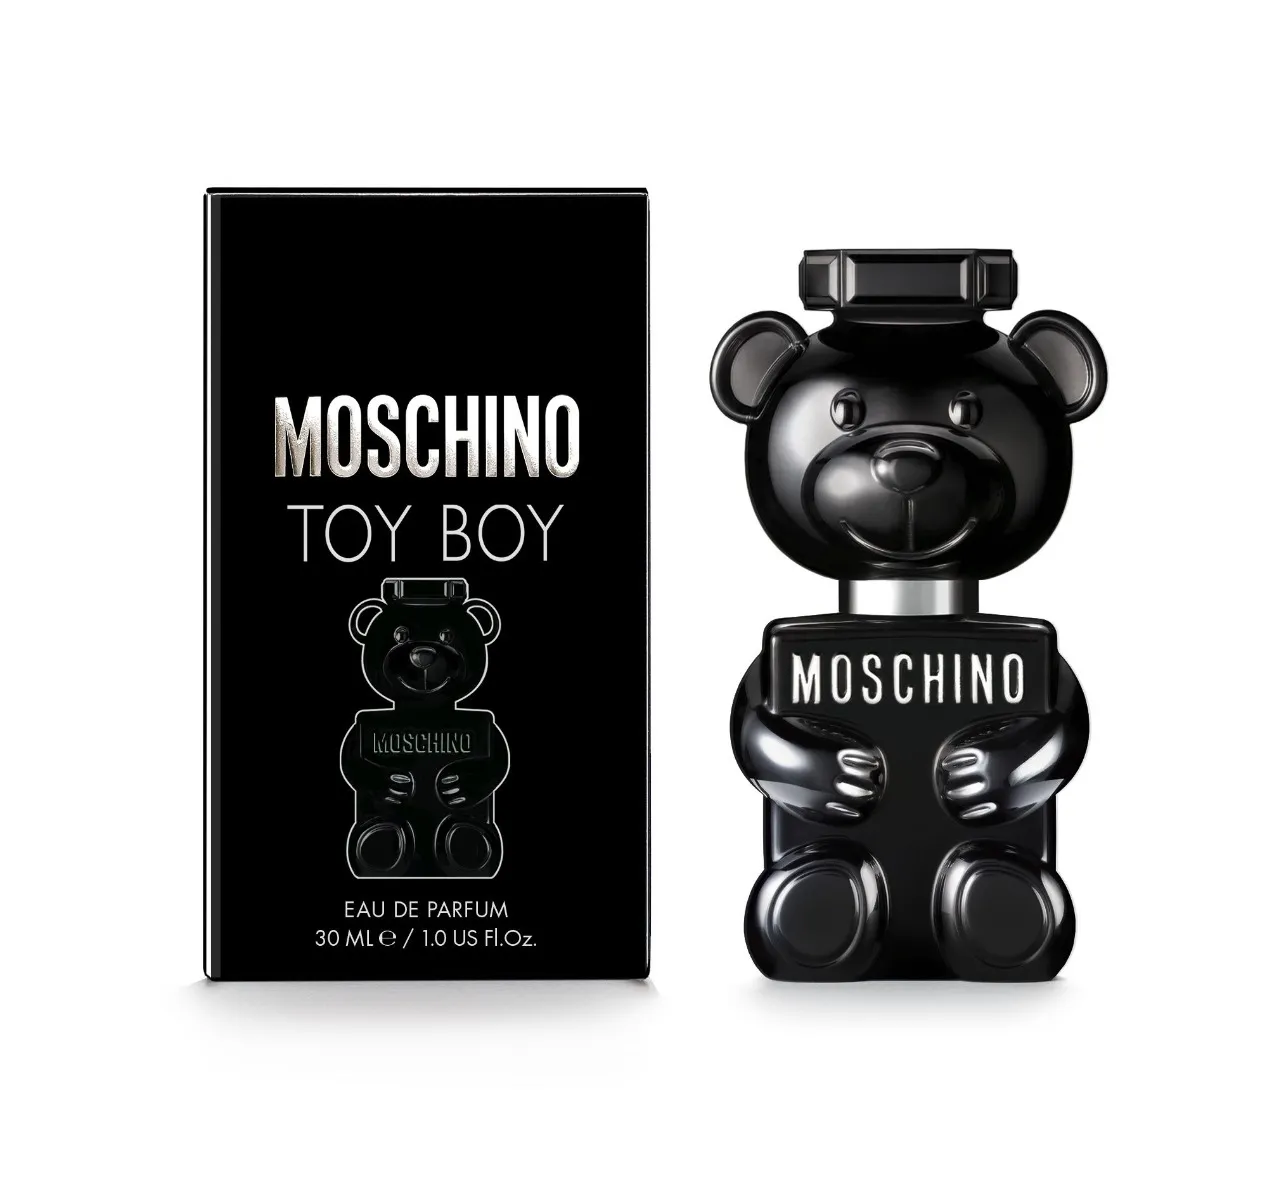 MOSCHINO Toy Boy